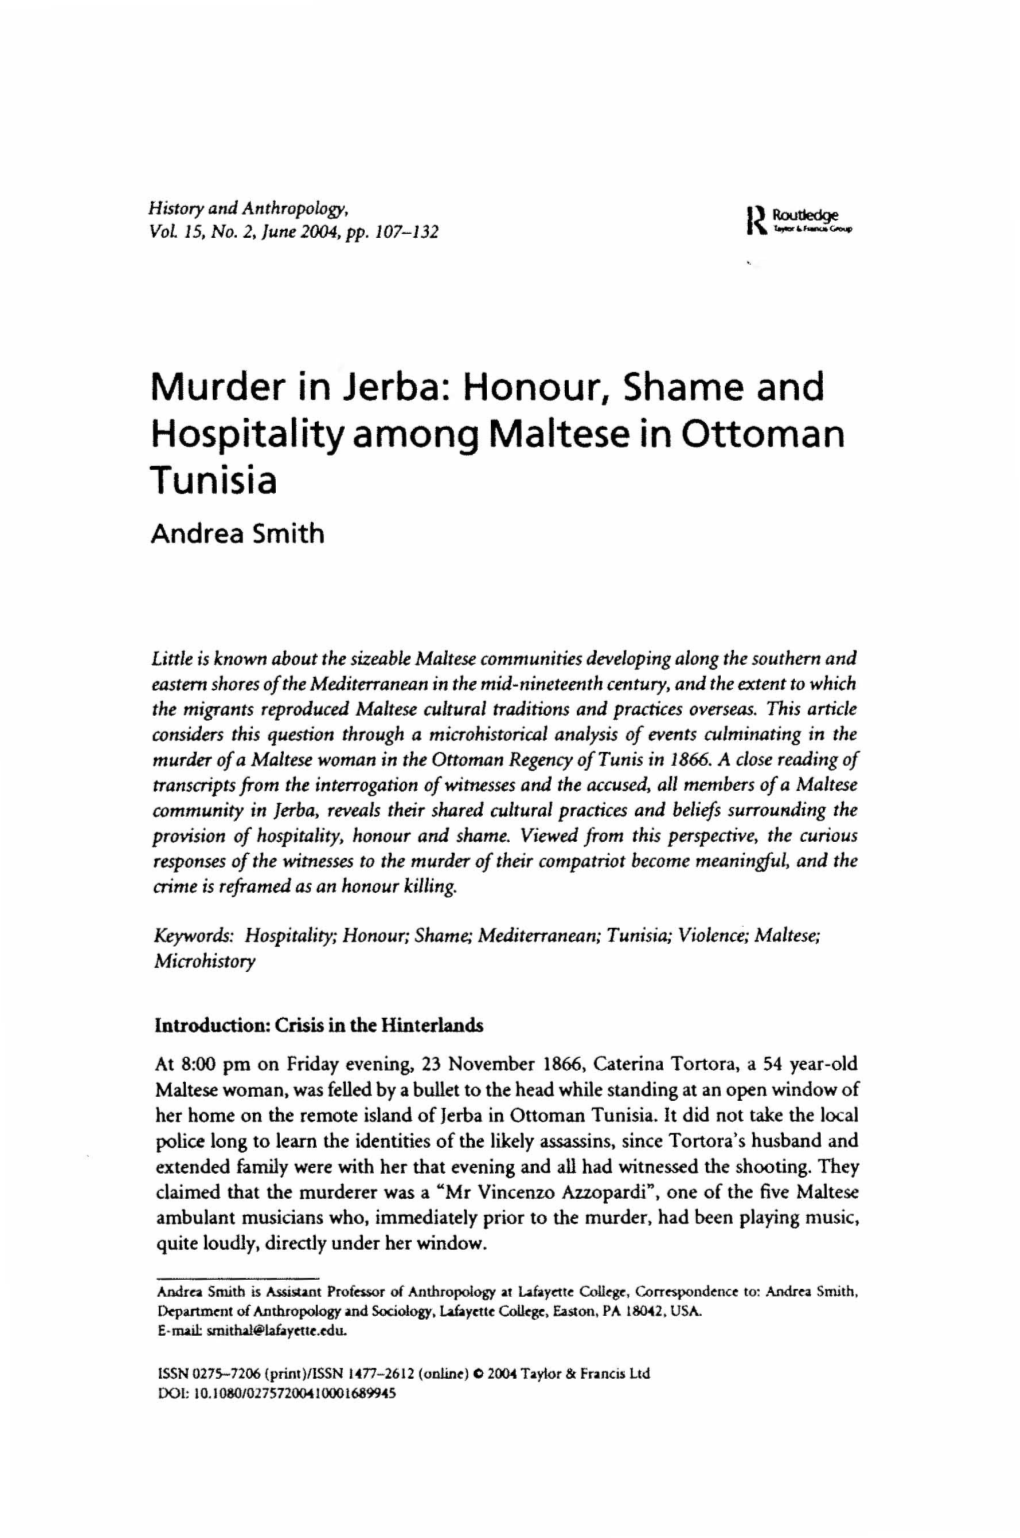 Honour, Shame and Hospitality Among Maltese in Ottoman Tunisia Andrea Smith